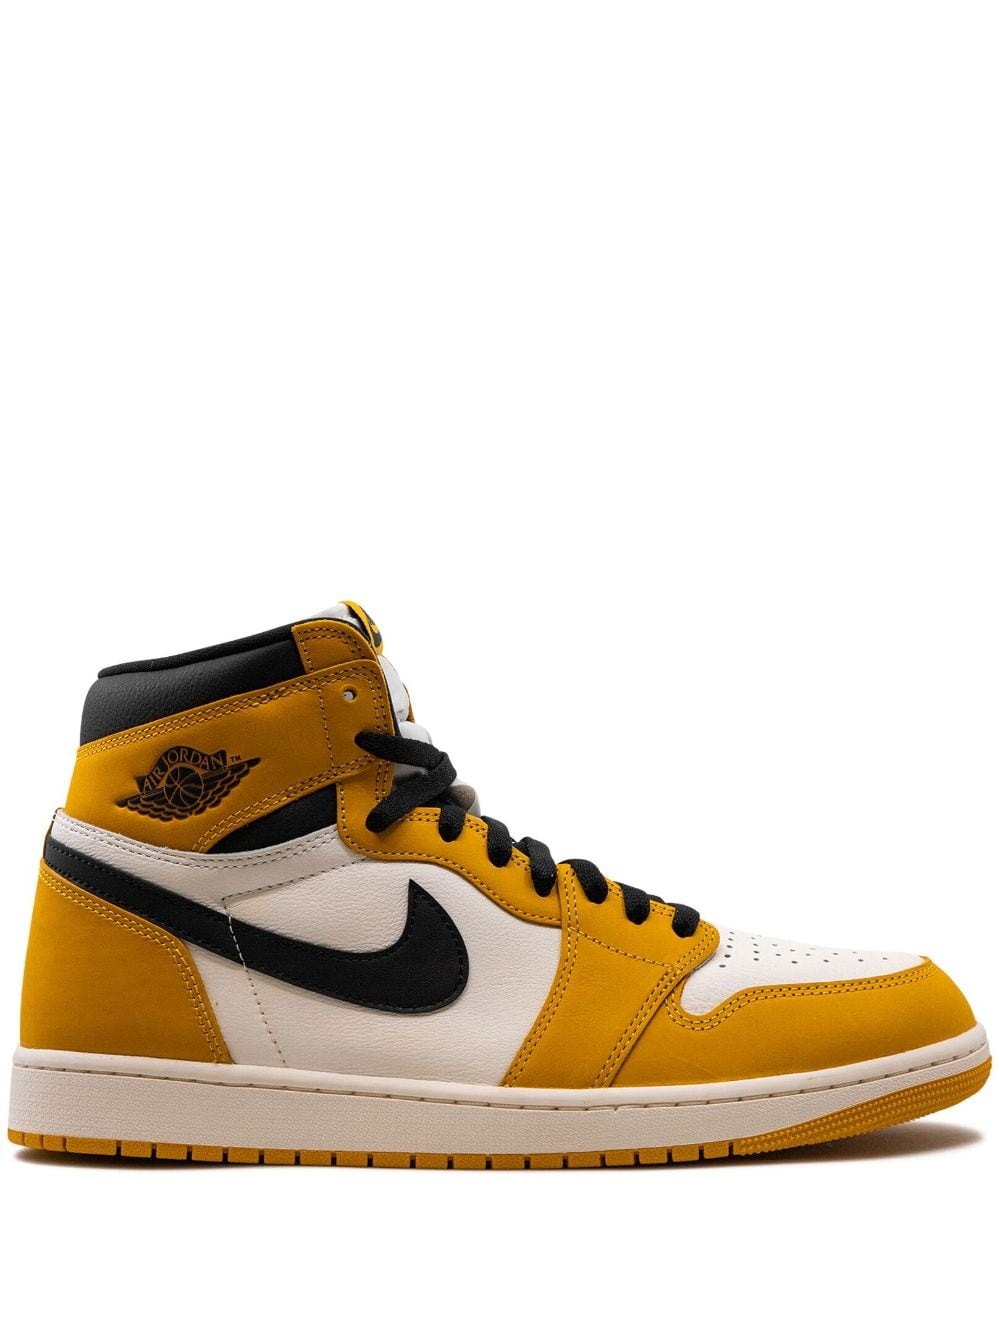 Air Jordan 1 Retro High OG "Yellow Ochre" sneakers - 1